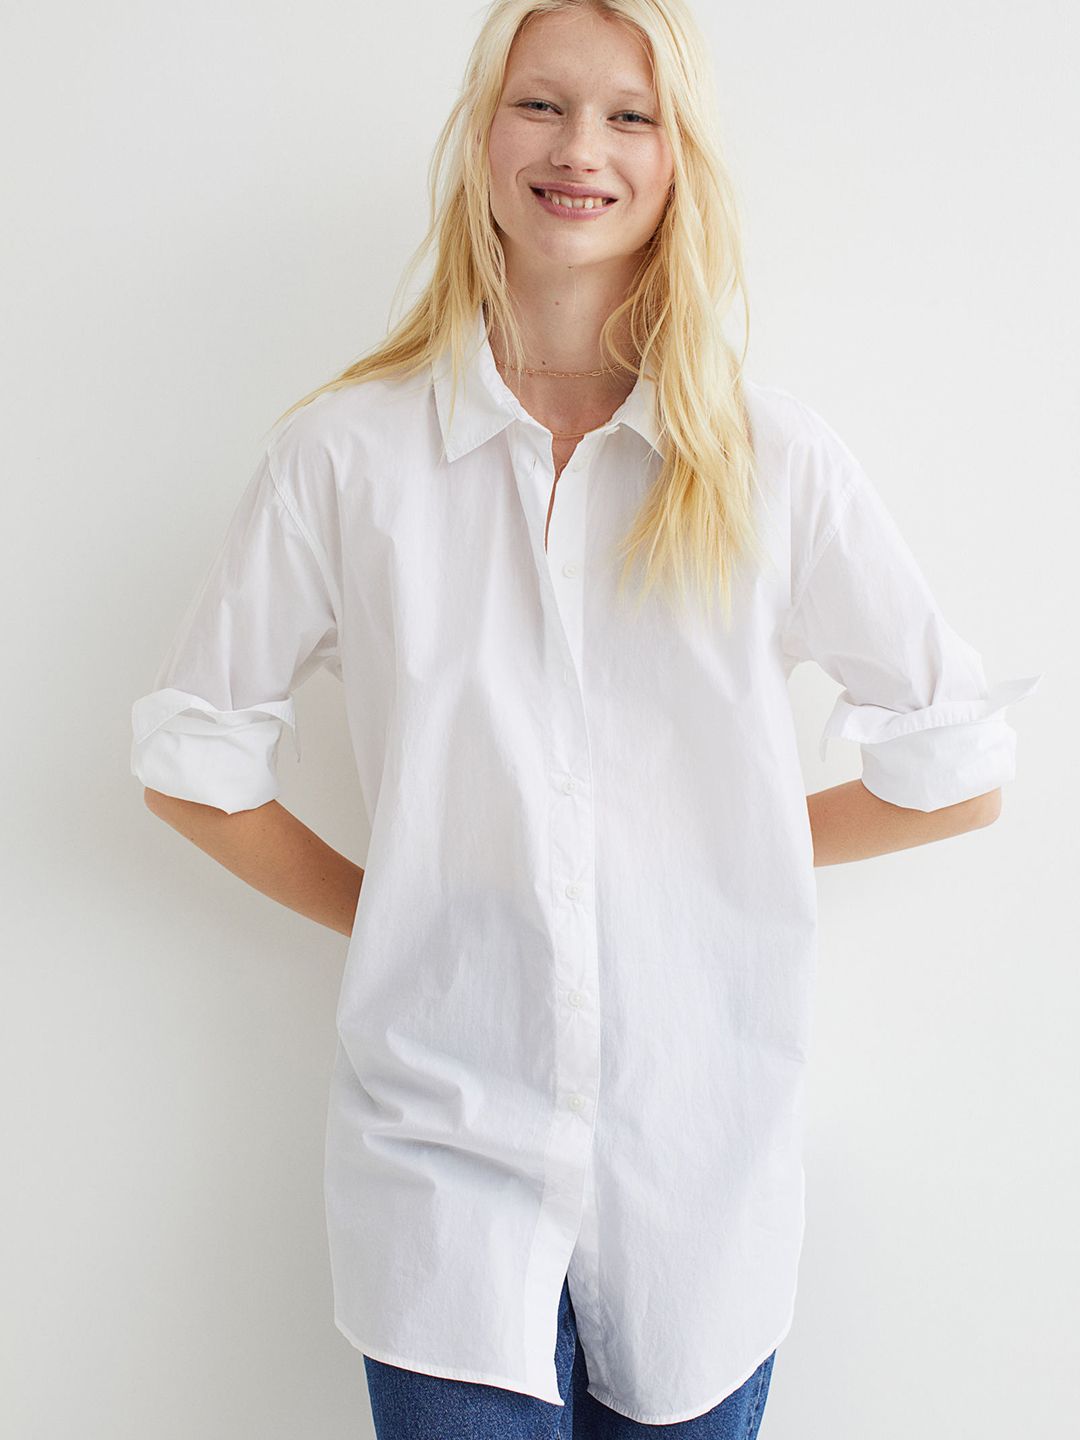 H&M Women White Long Cotton Shirt Price in India